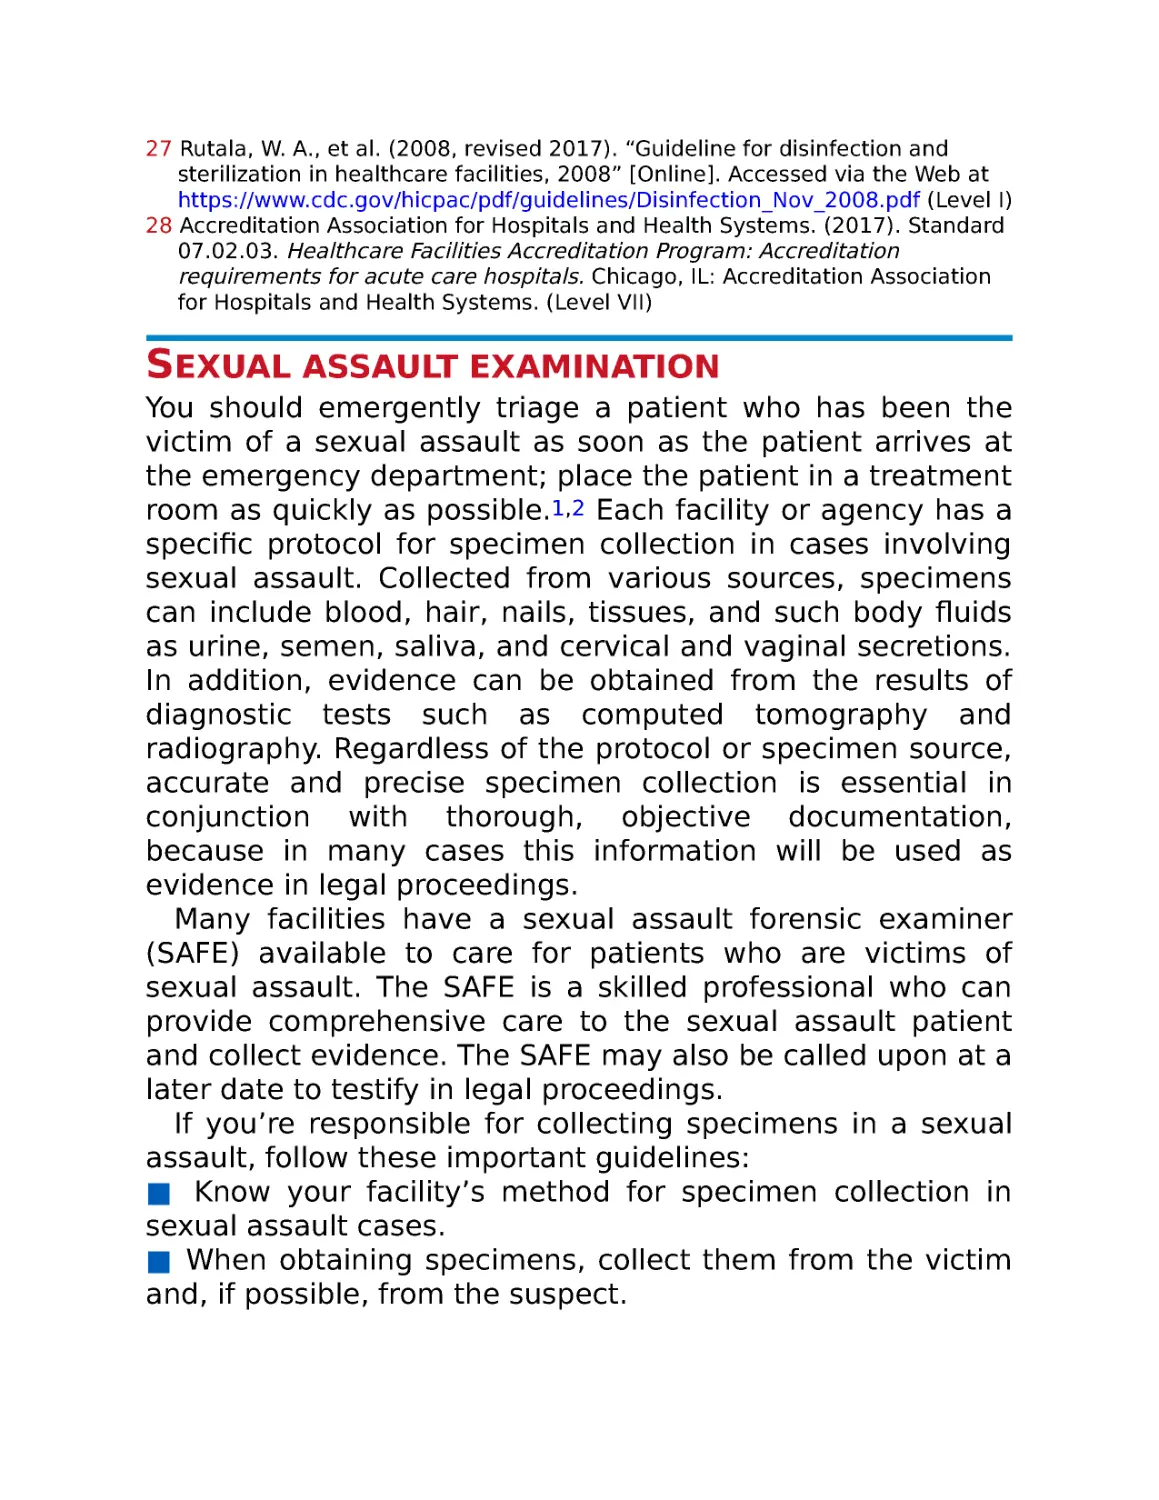 Sexual assault examination